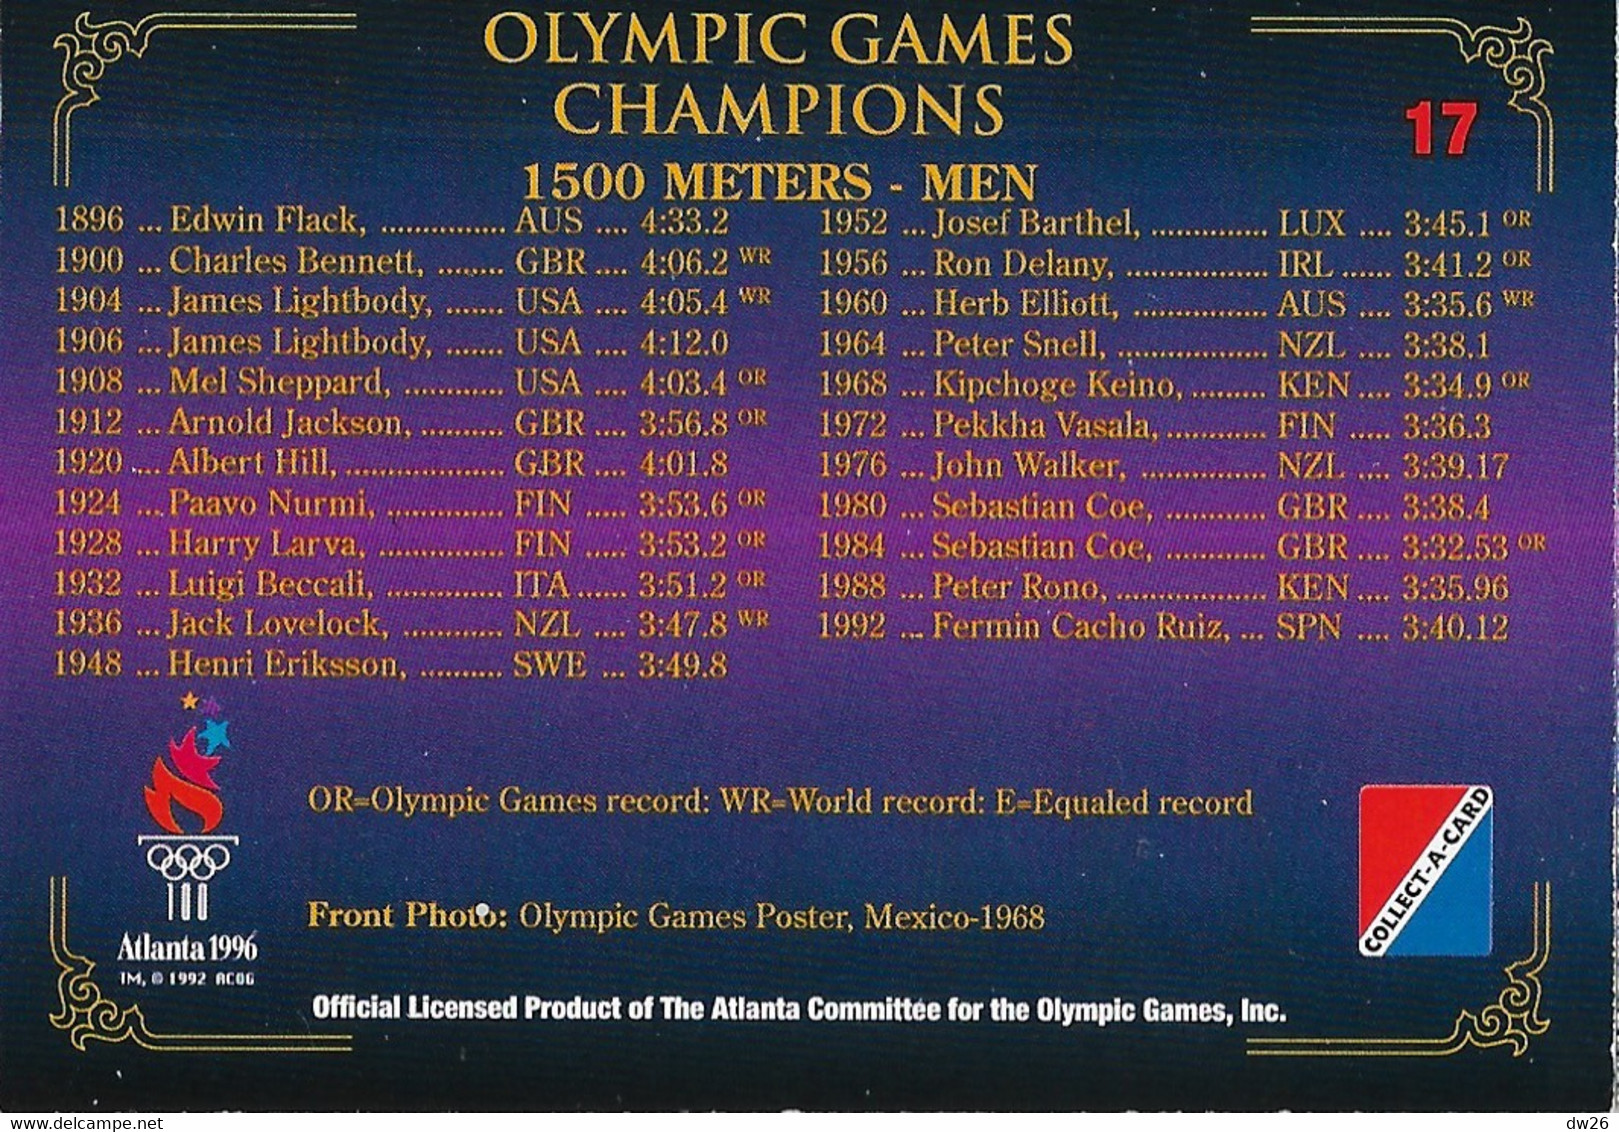 Centennial Olympic Games Atlanta 1996, Collect Card N° 17 - Poster Mexico 1968 - Palmarès Champions 1500 M Men - Tarjetas